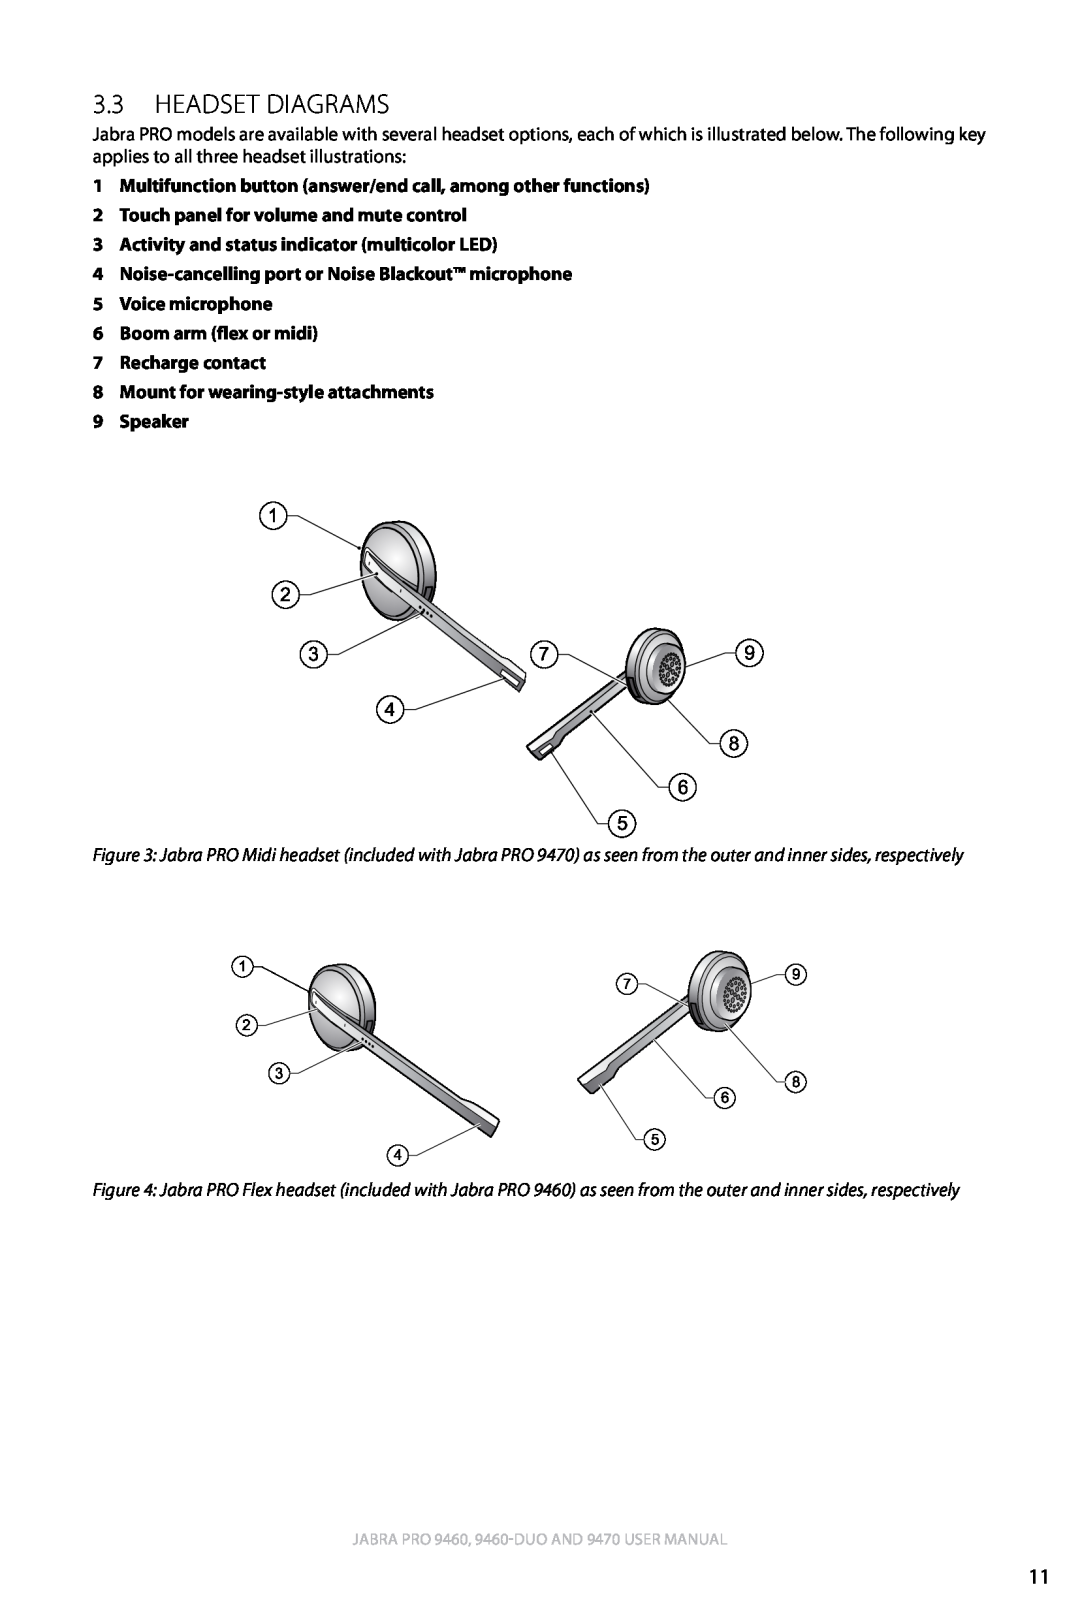 Lennox Hearth 9470 user manual 3.3Headset Diagrams, english 